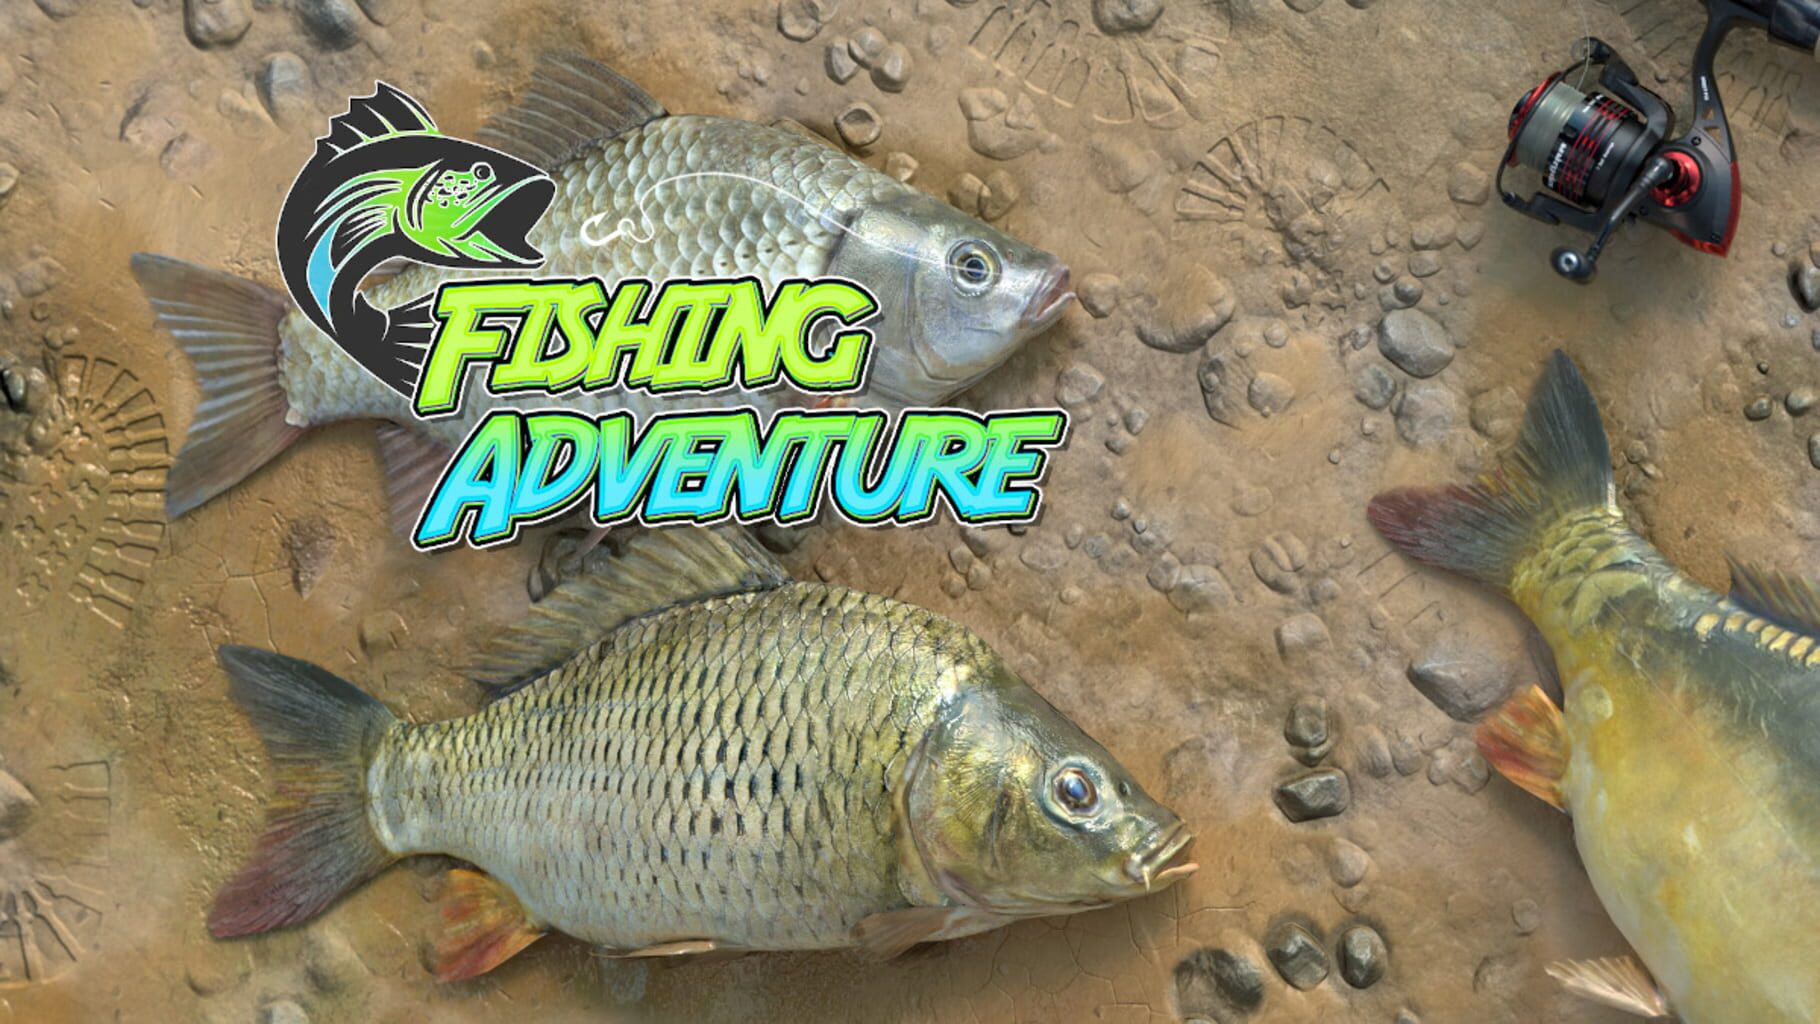 Fishing Adventure artwork